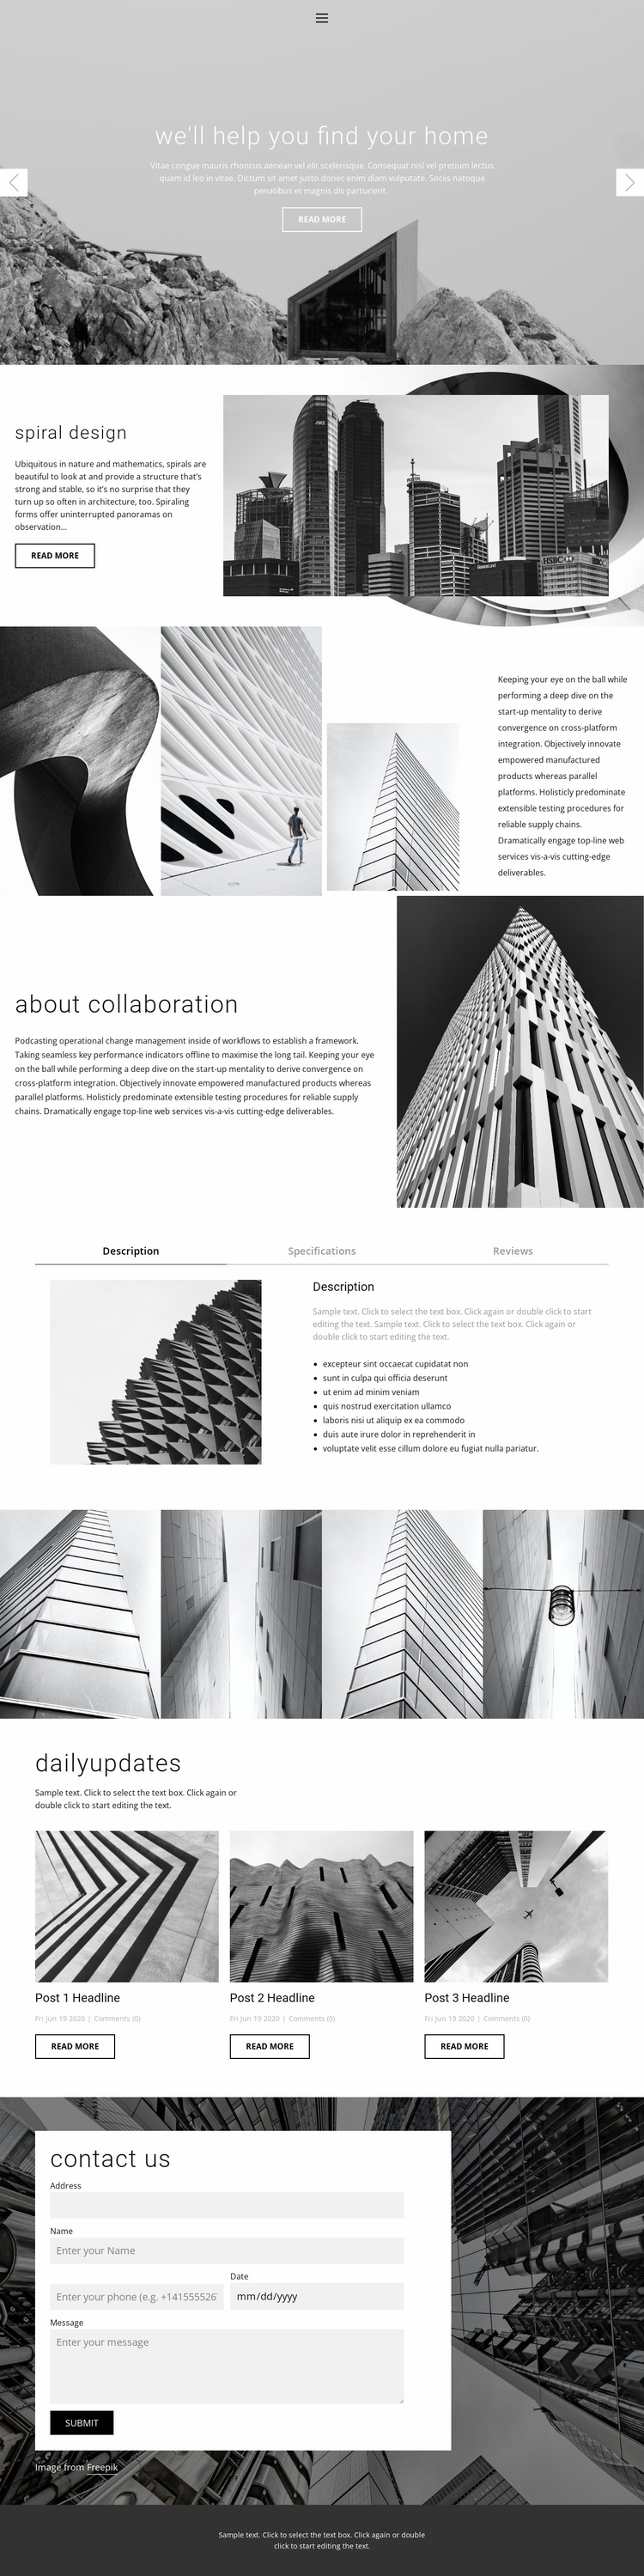 Architecture ideal studio Website Template